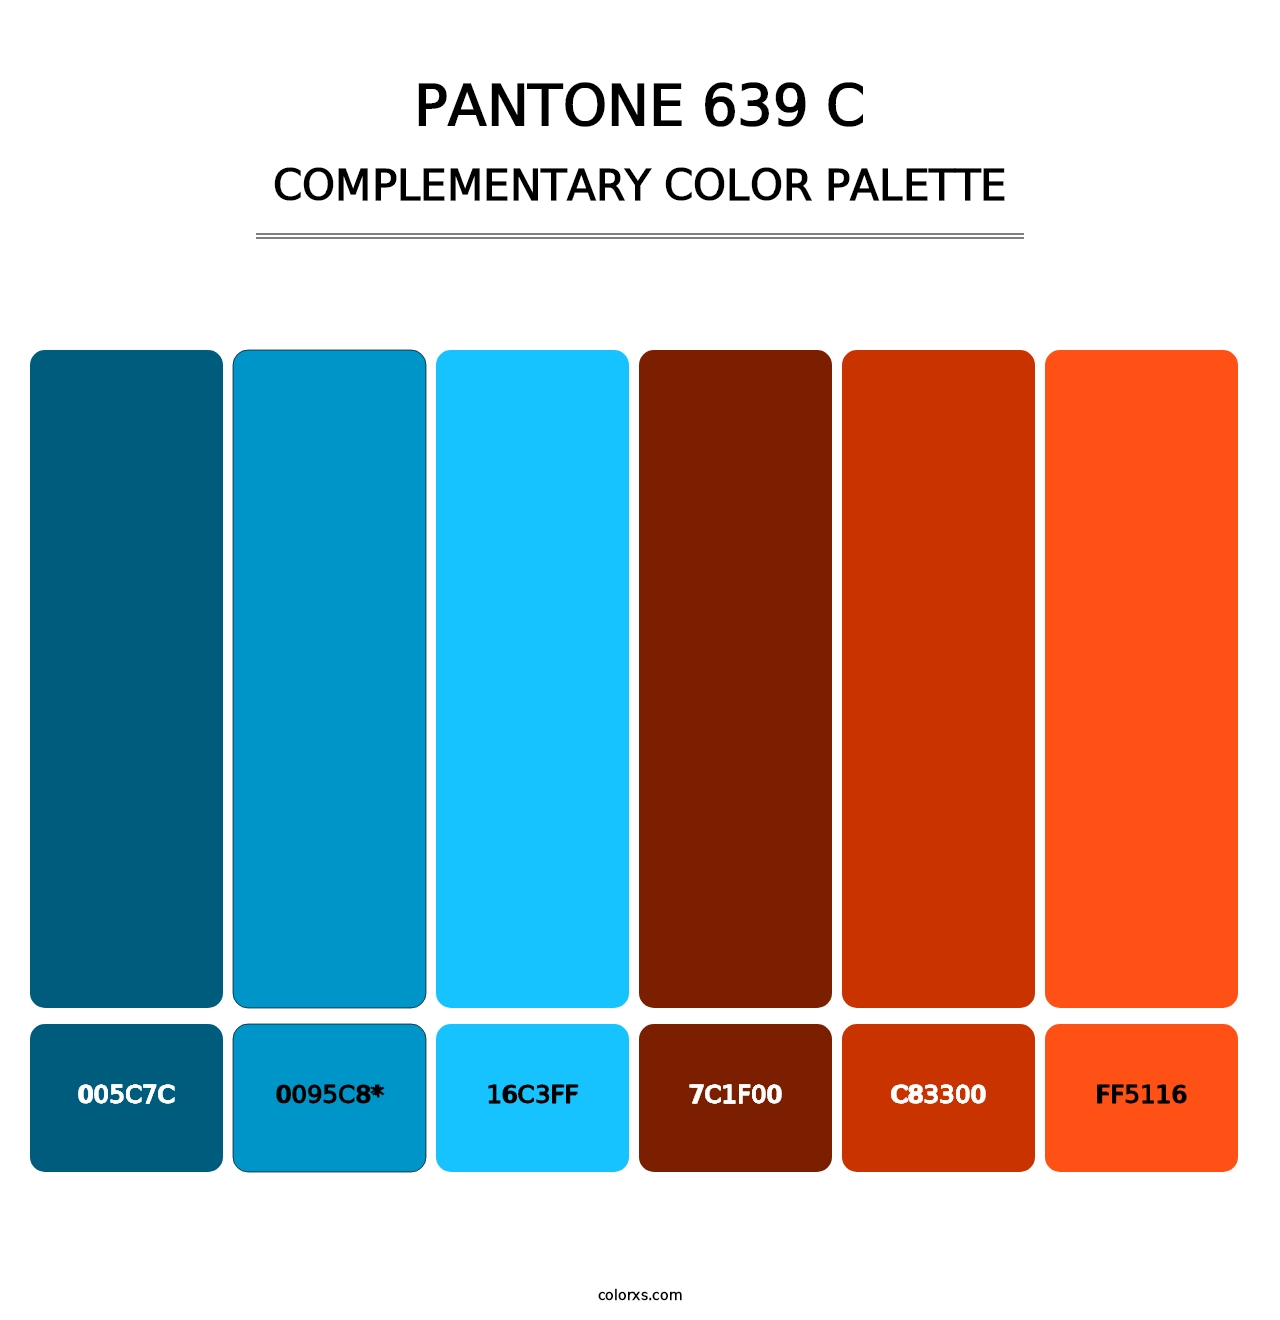 PANTONE 639 C - Complementary Color Palette